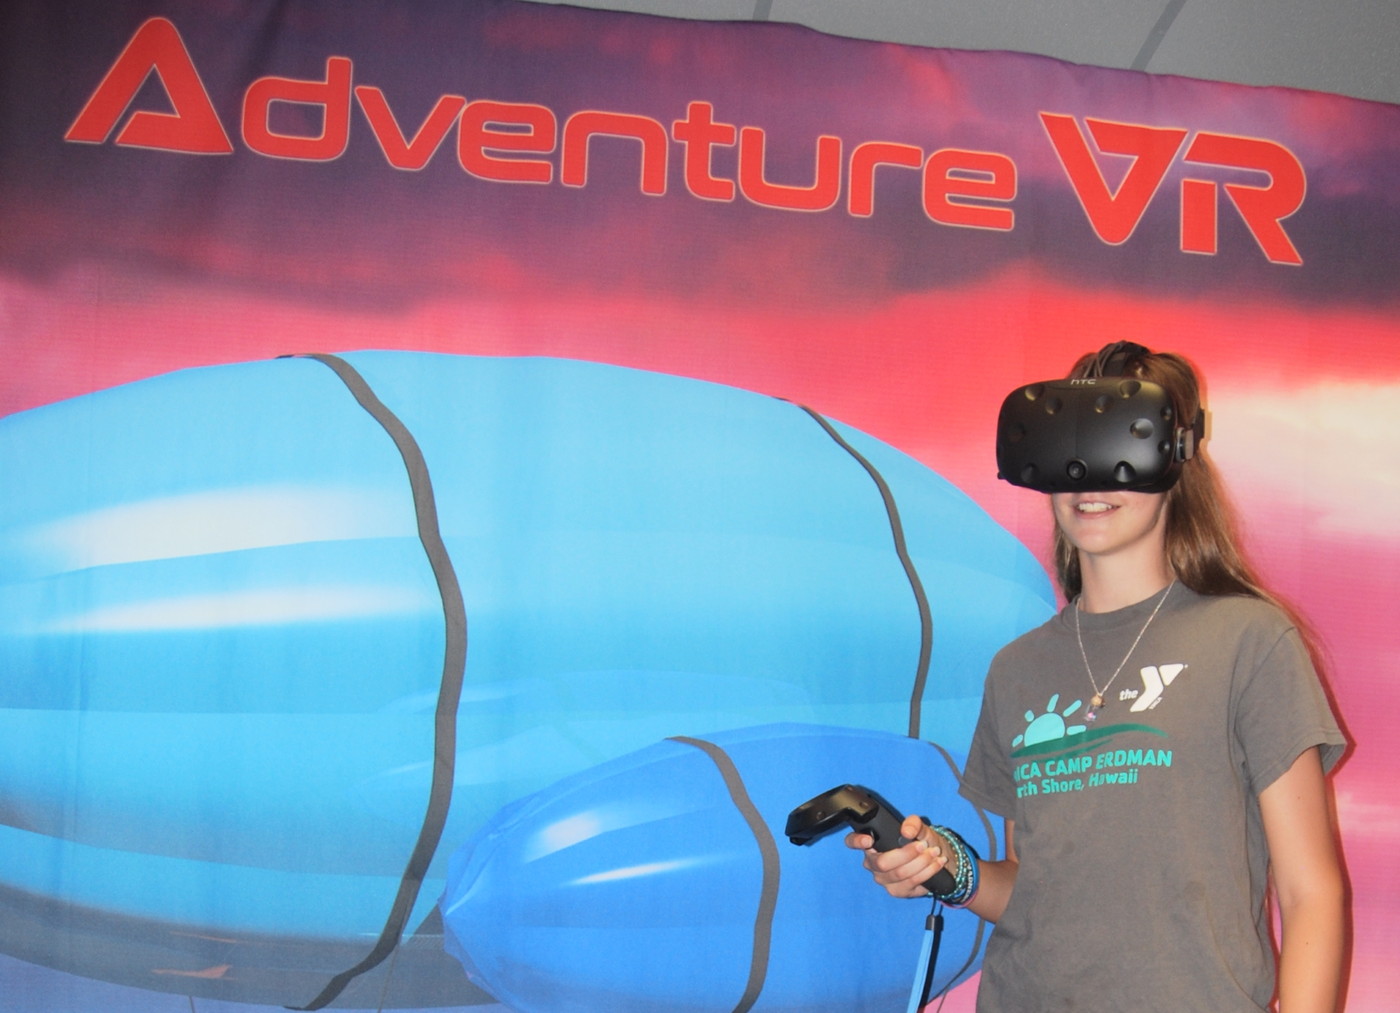 Adventure VR is fun